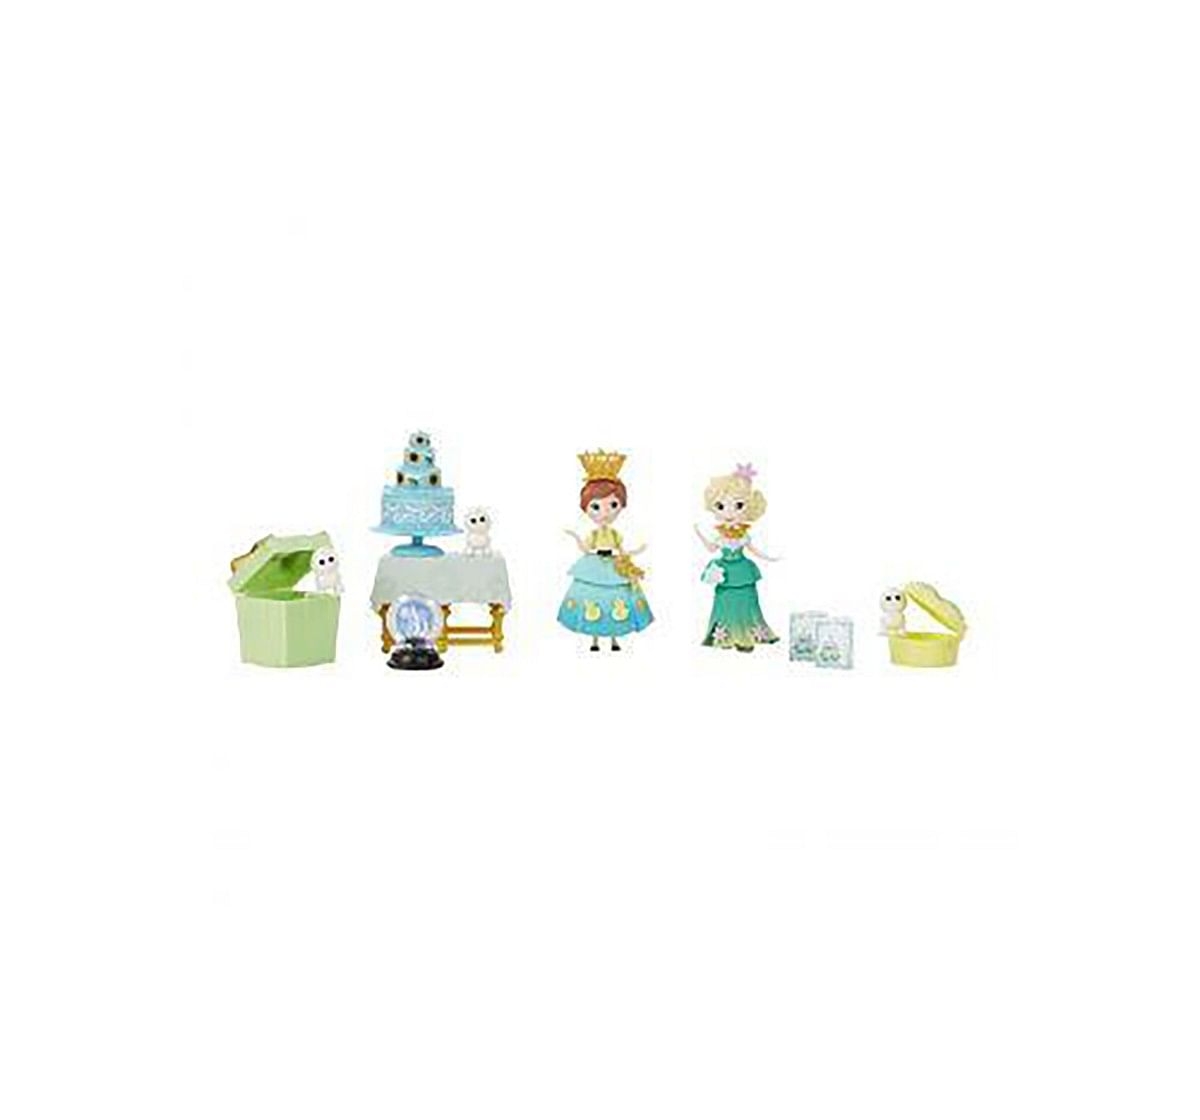 Disney Frozen Little Kingdom Frozen Fever Set Assorted Dolls & Accessories for Girls age 4Y+ 